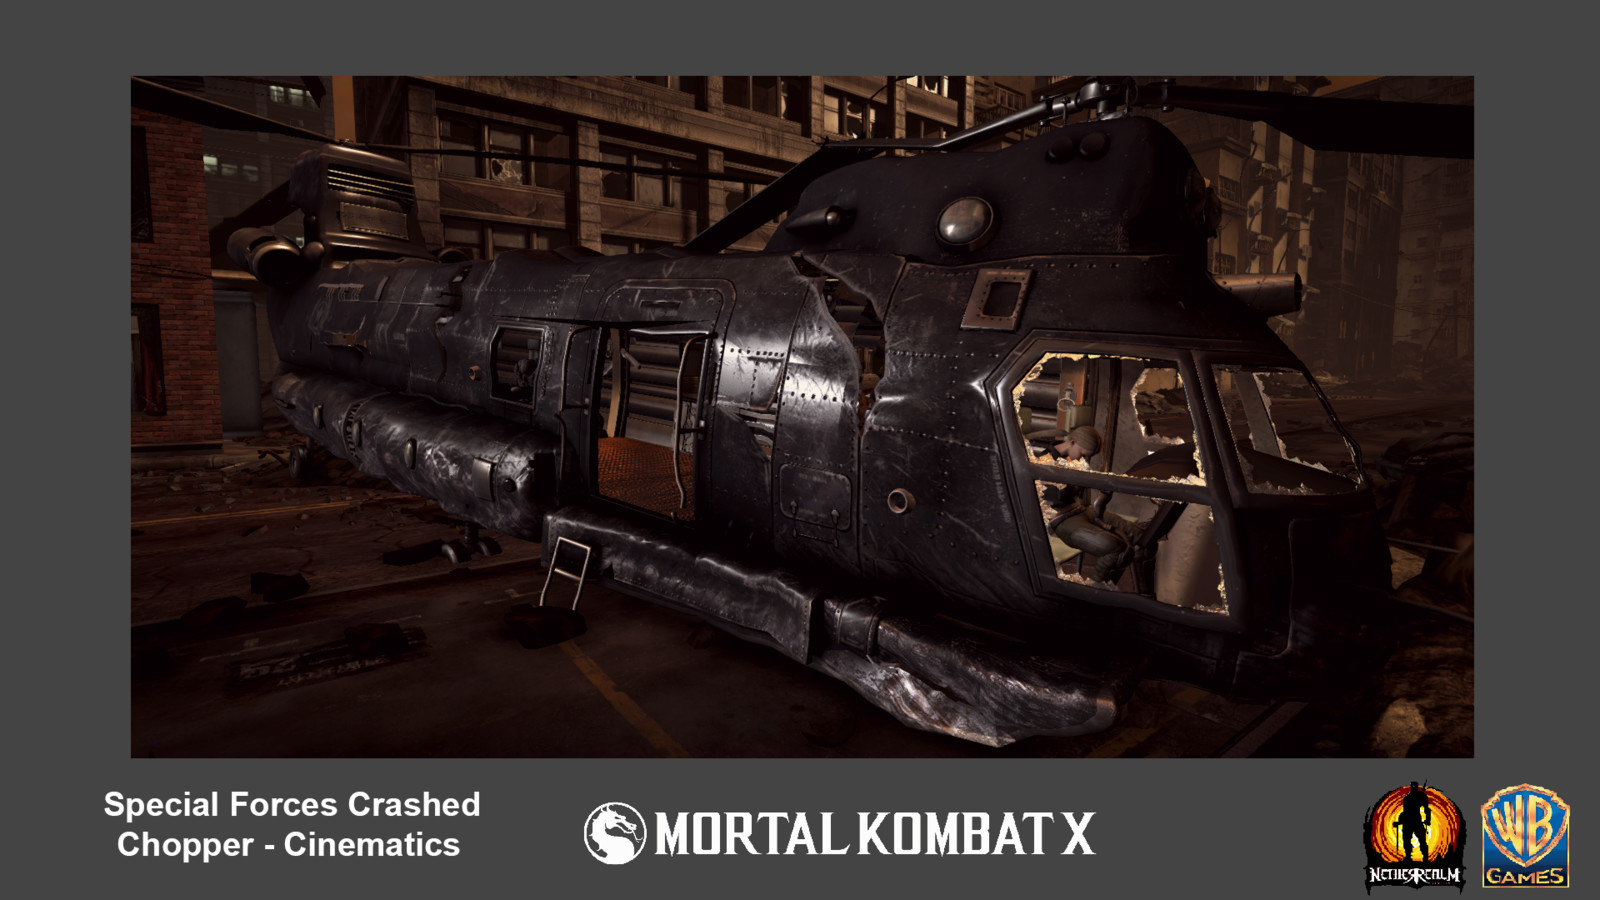 Cinematic destroyed chopper.